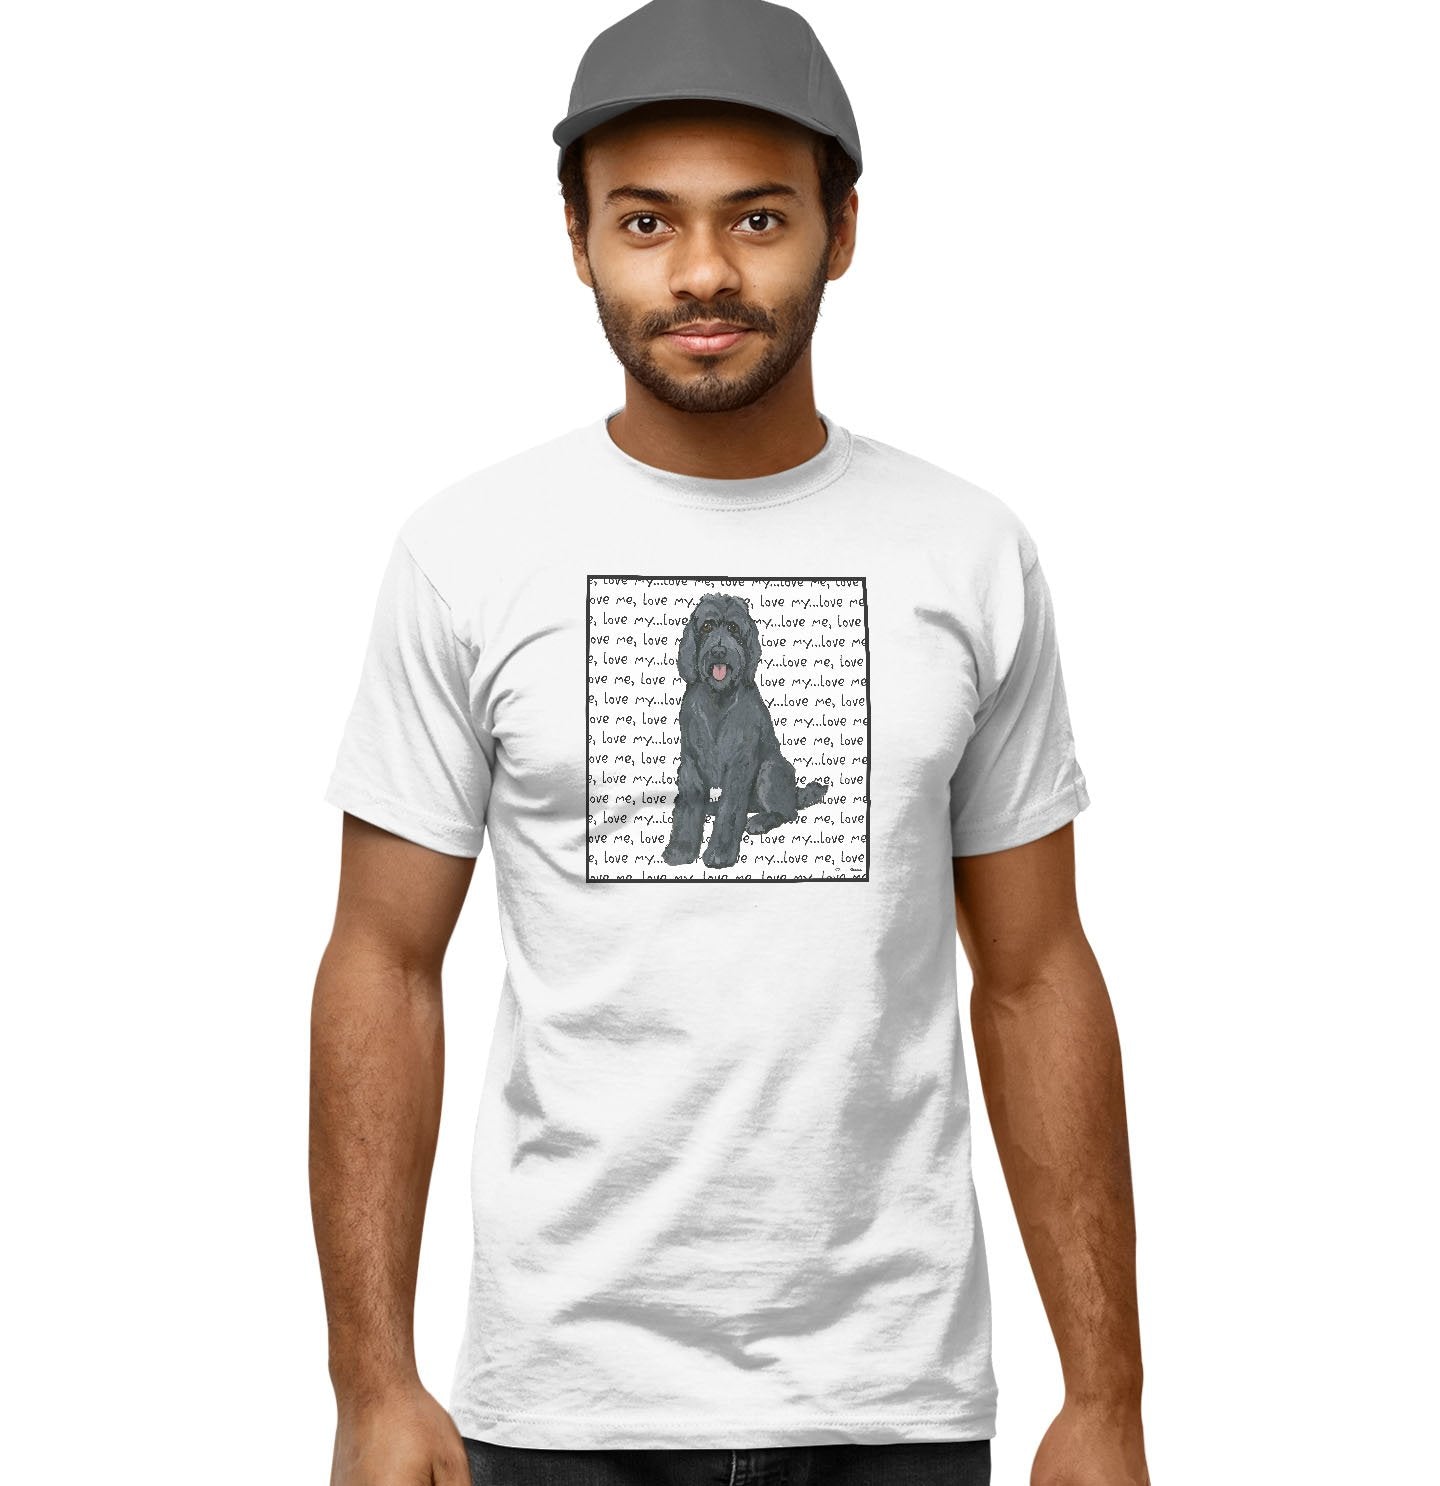 Black Labradoodle Love - Adult Unisex T-Shirt